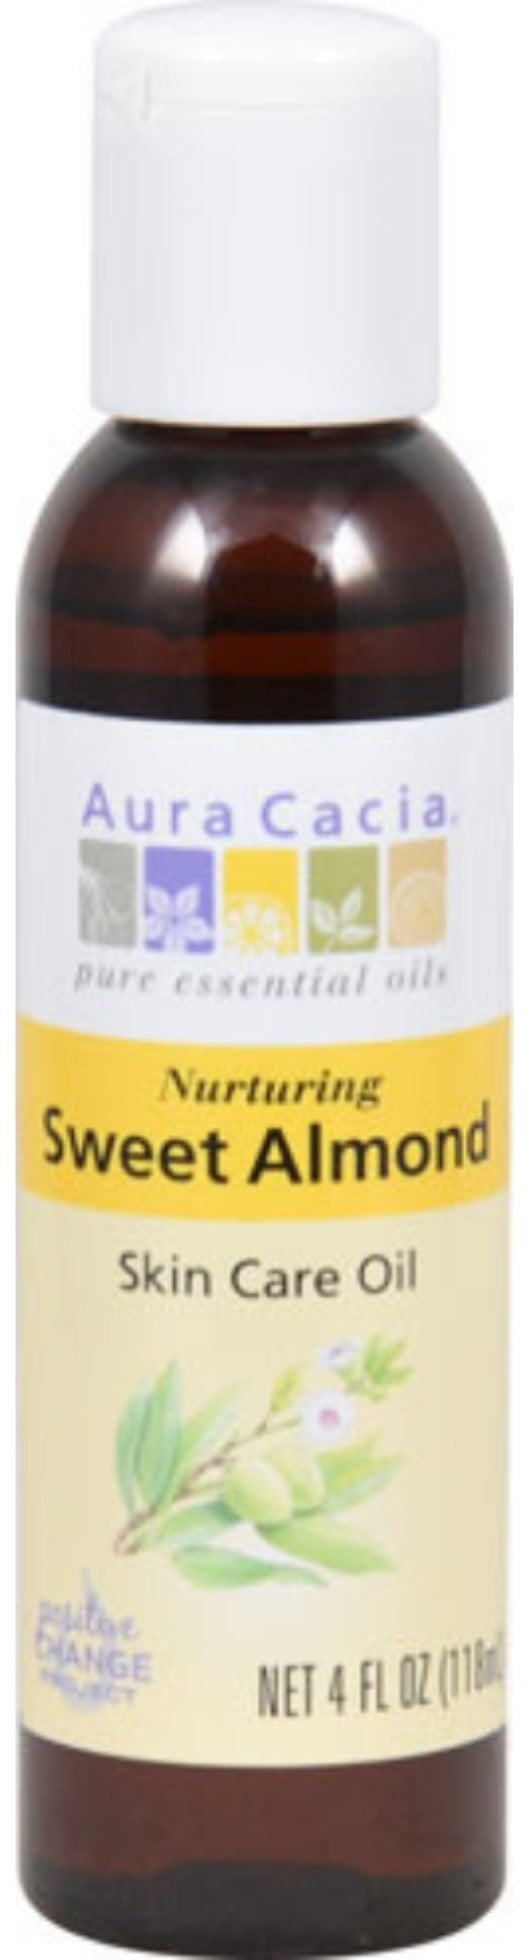 Aura Cacia Natural Skin Care Oil With Vitamin E Nurturing Sweet Almond, 4 oz Bottle